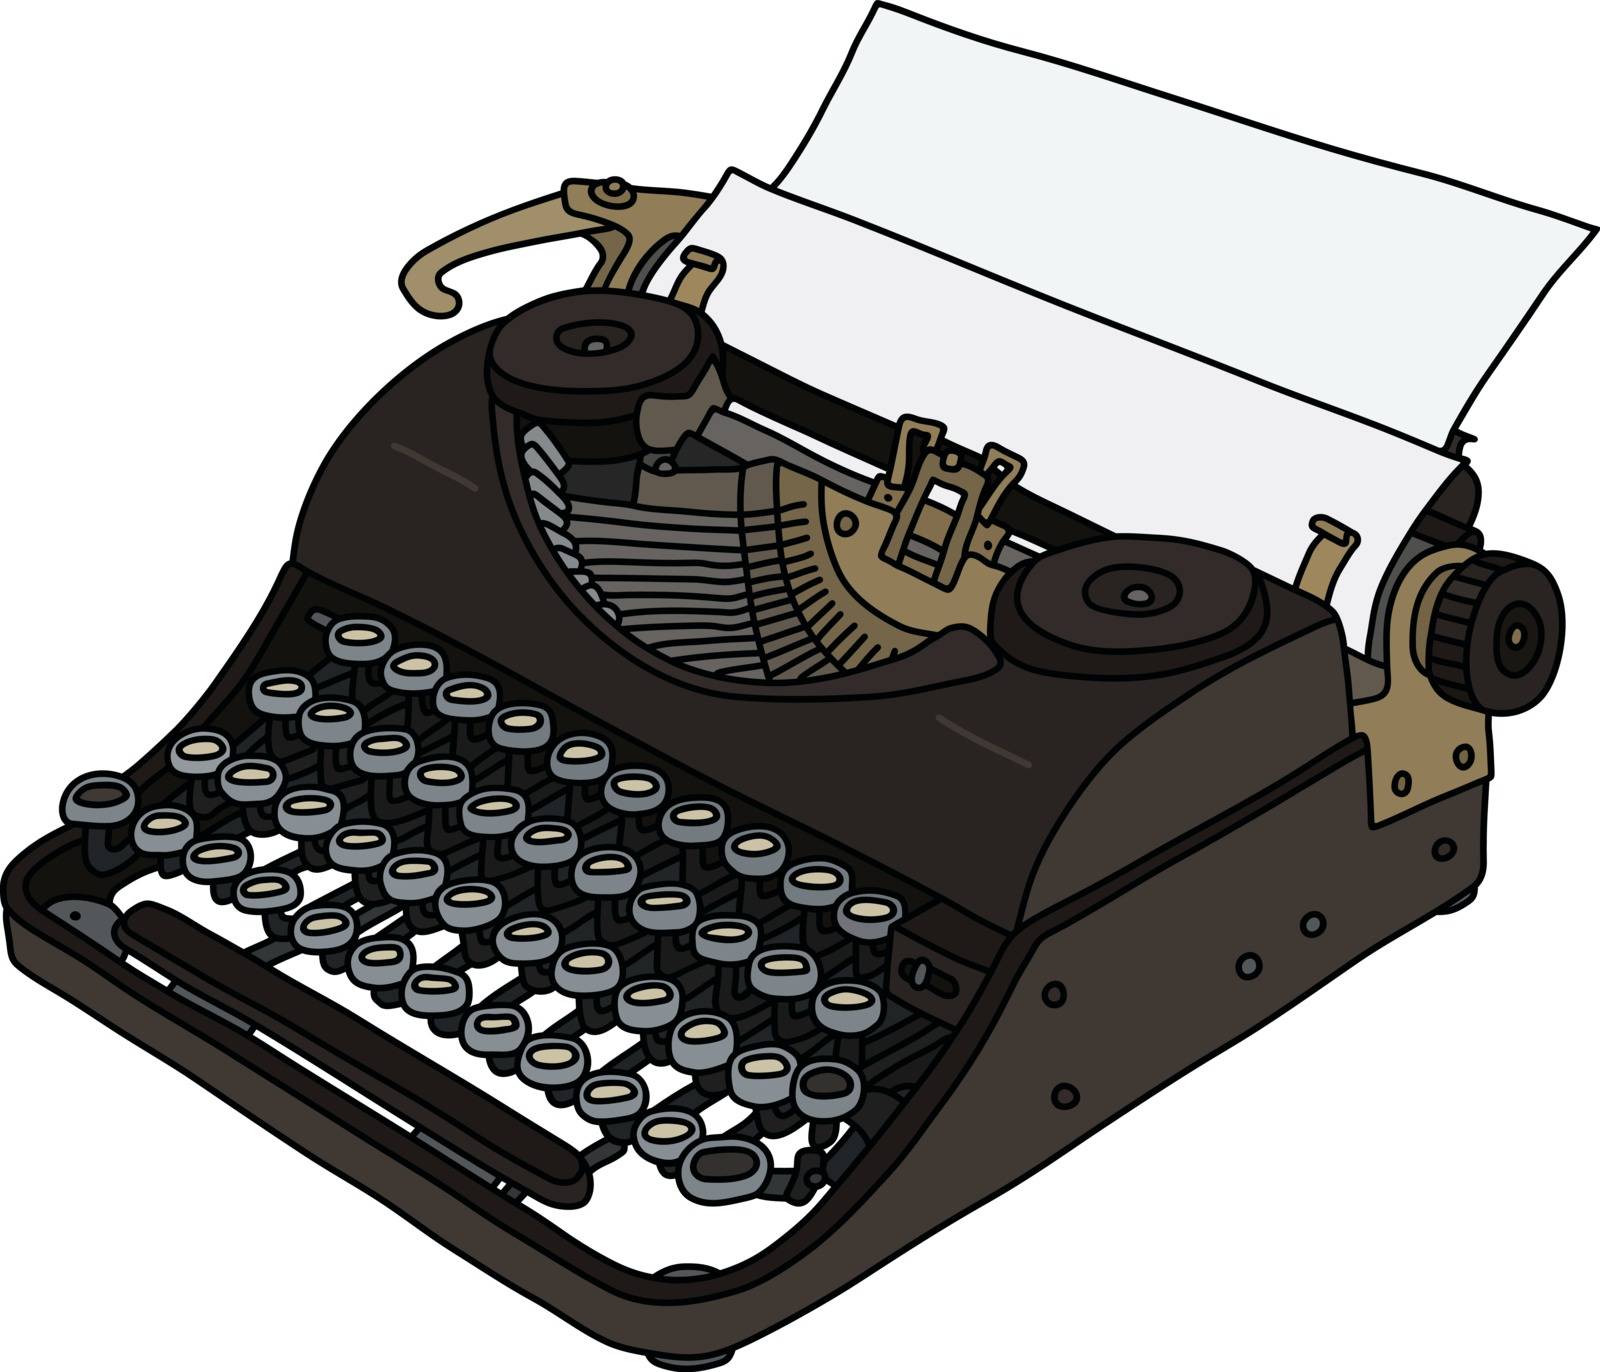 The vintage portable typewriter by vostal